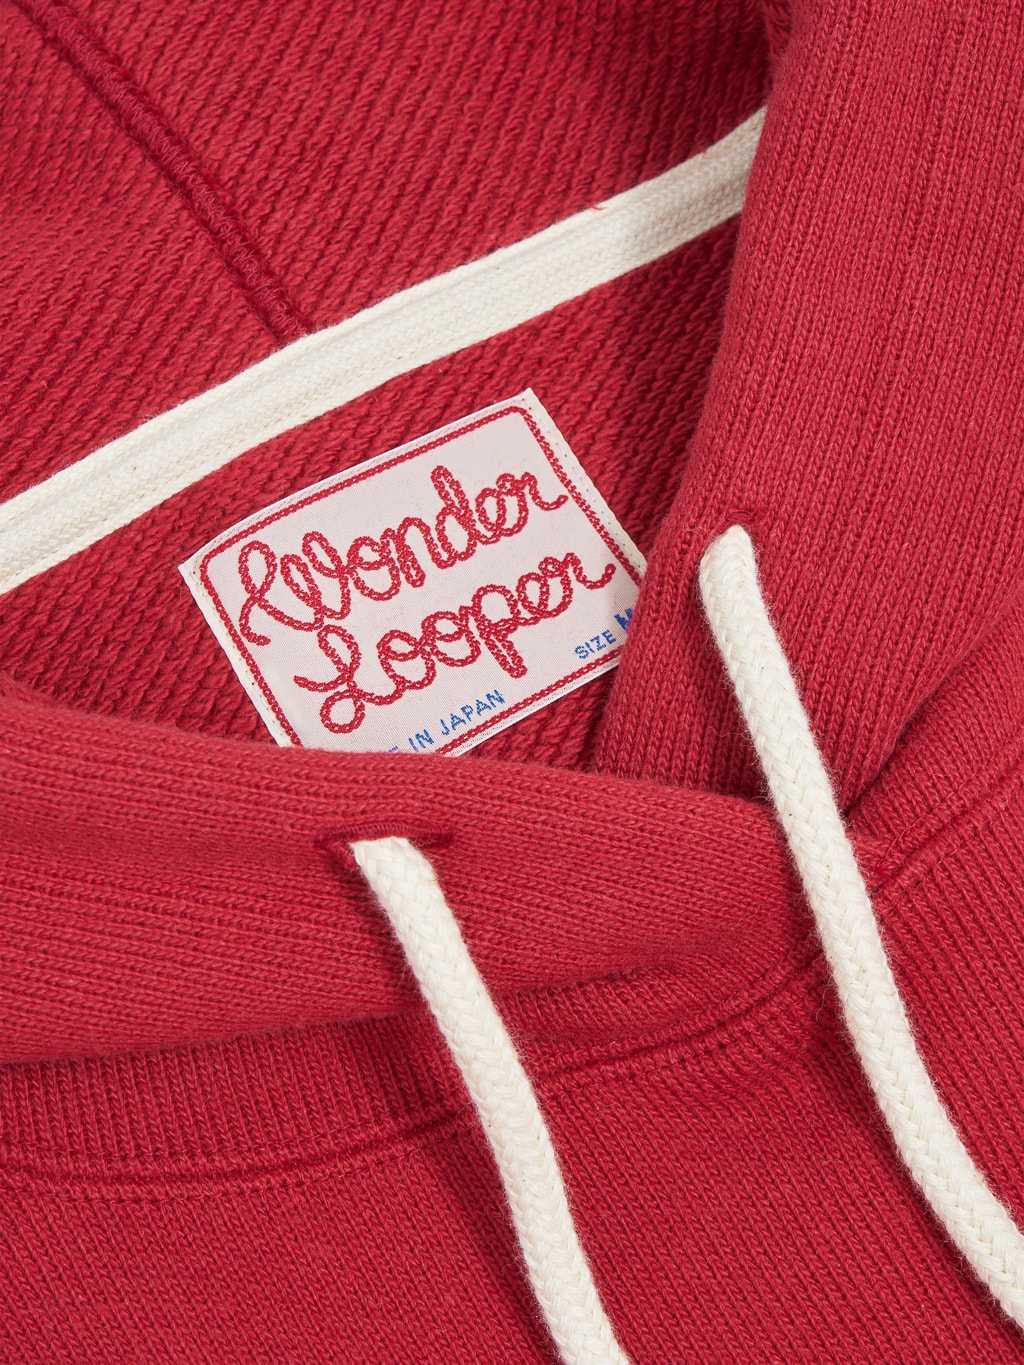 Wonder Looper Pullover Hoodie Double Heavyweight red brand label